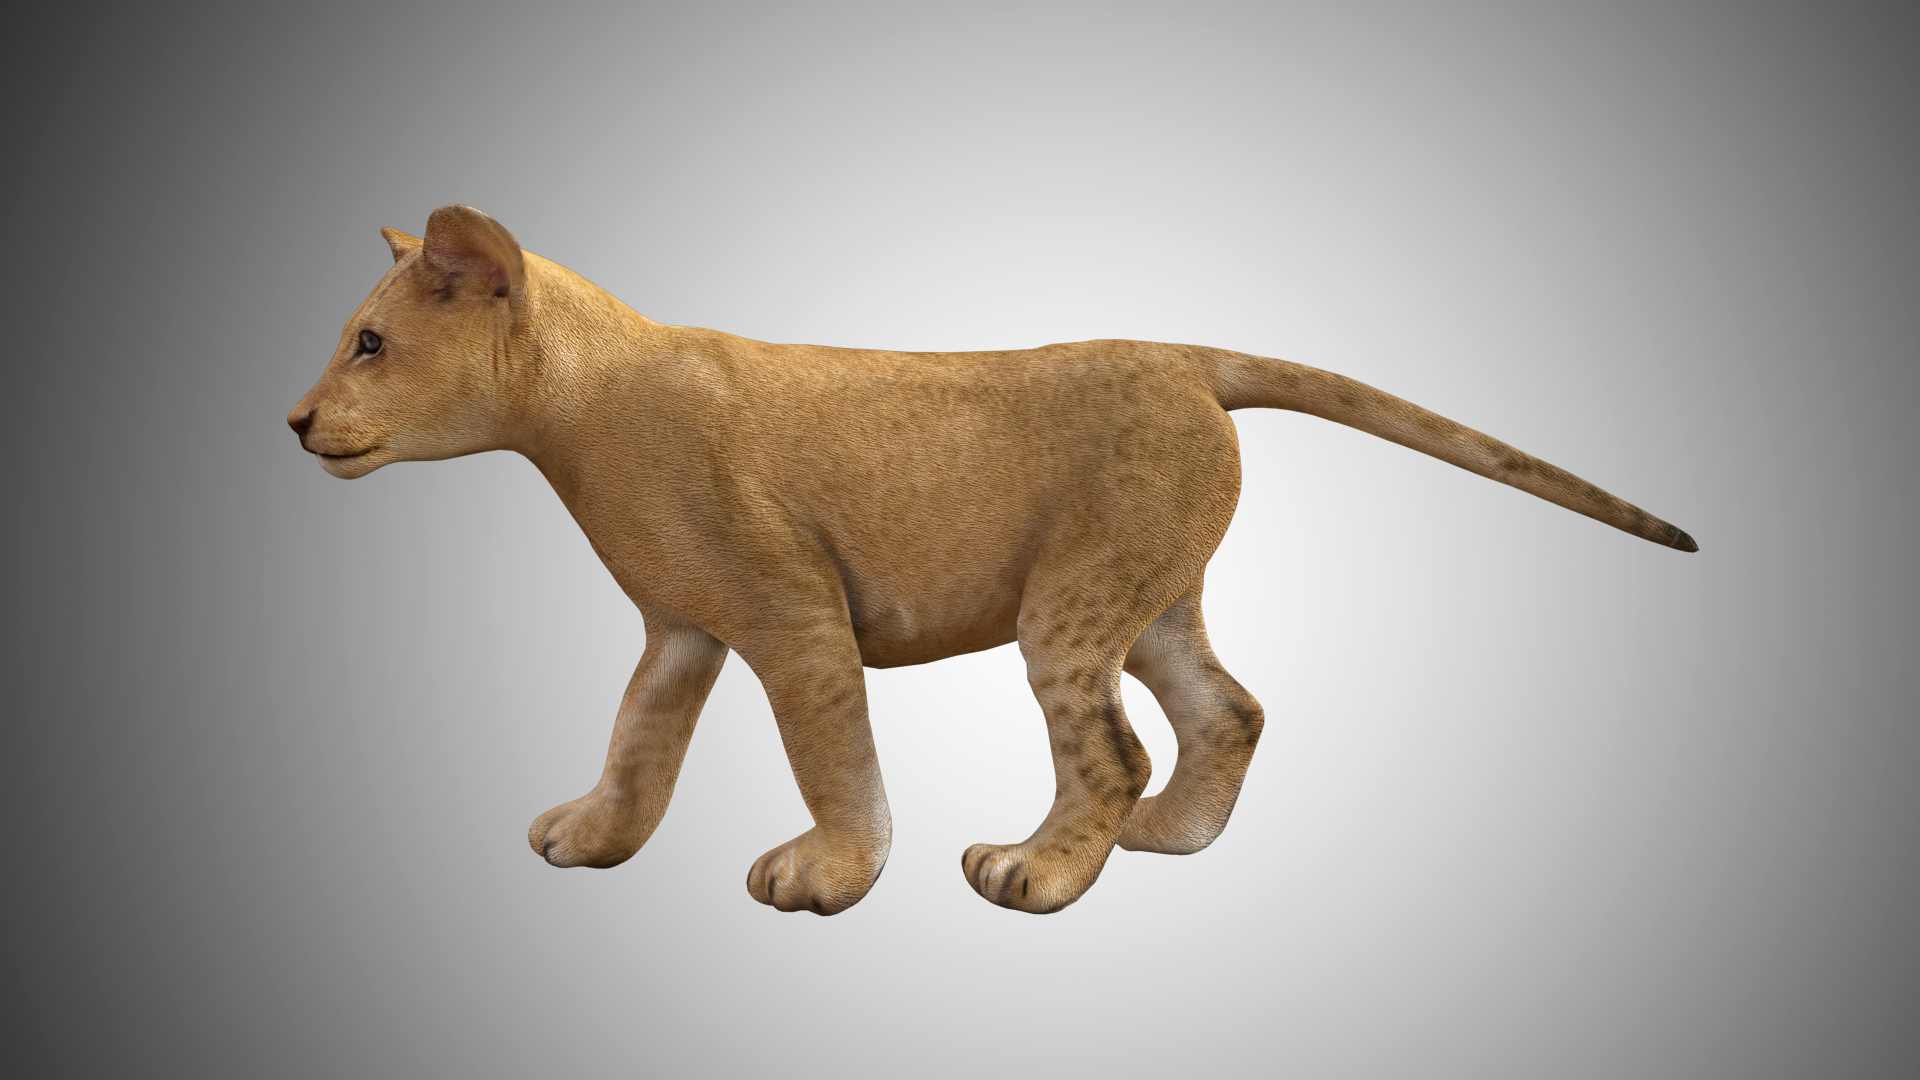 Prime 3D Puzzles Lenticular Picture Animals 63 Pce First Born Lion Cub 